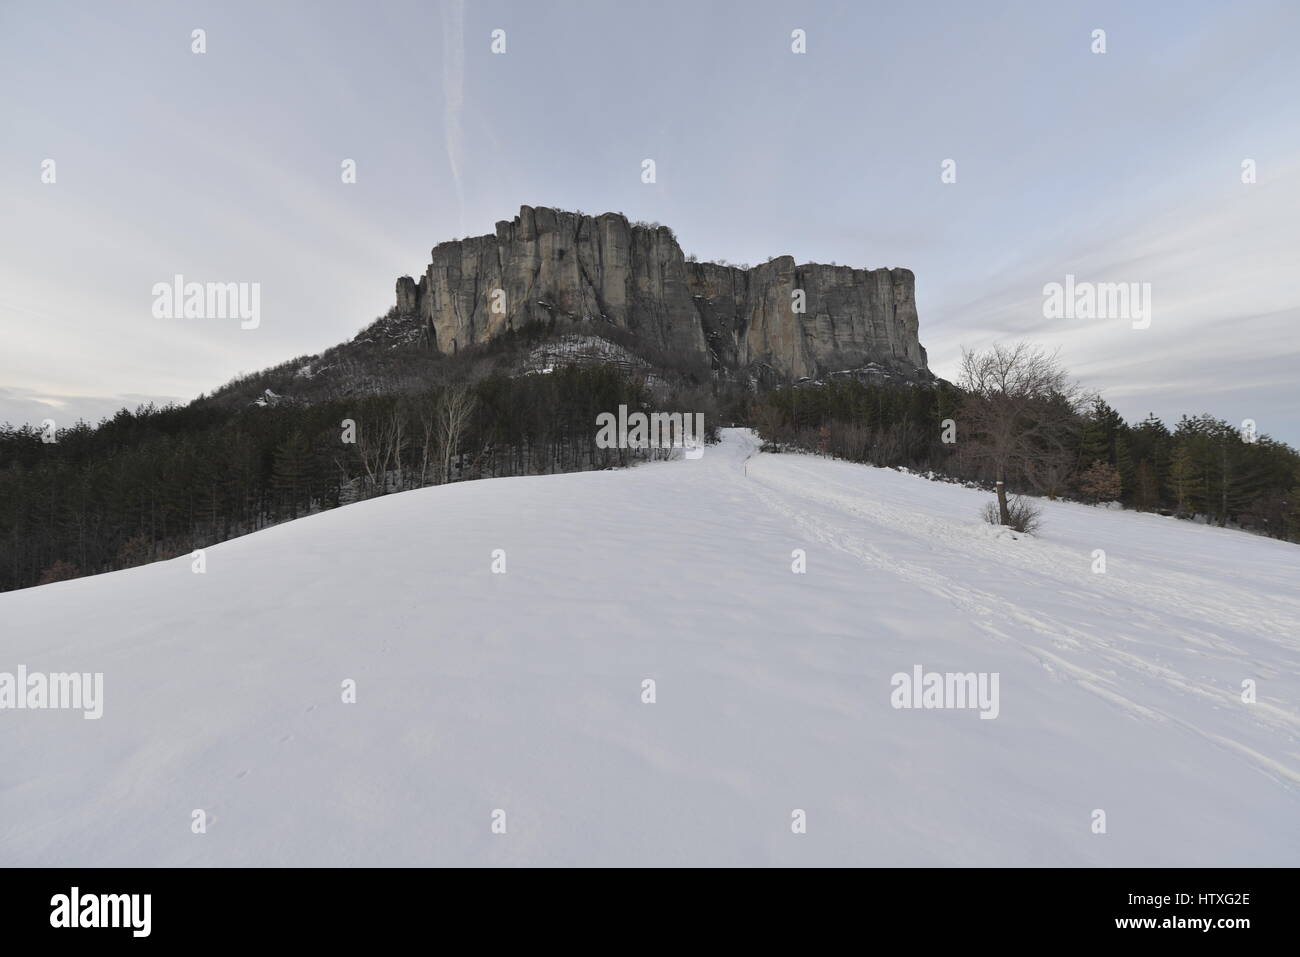 PIETRA DI BISMANTOVA in winter witn snow. Castelnovo Monti, Emilia-Romagna, Italy Stock Photo